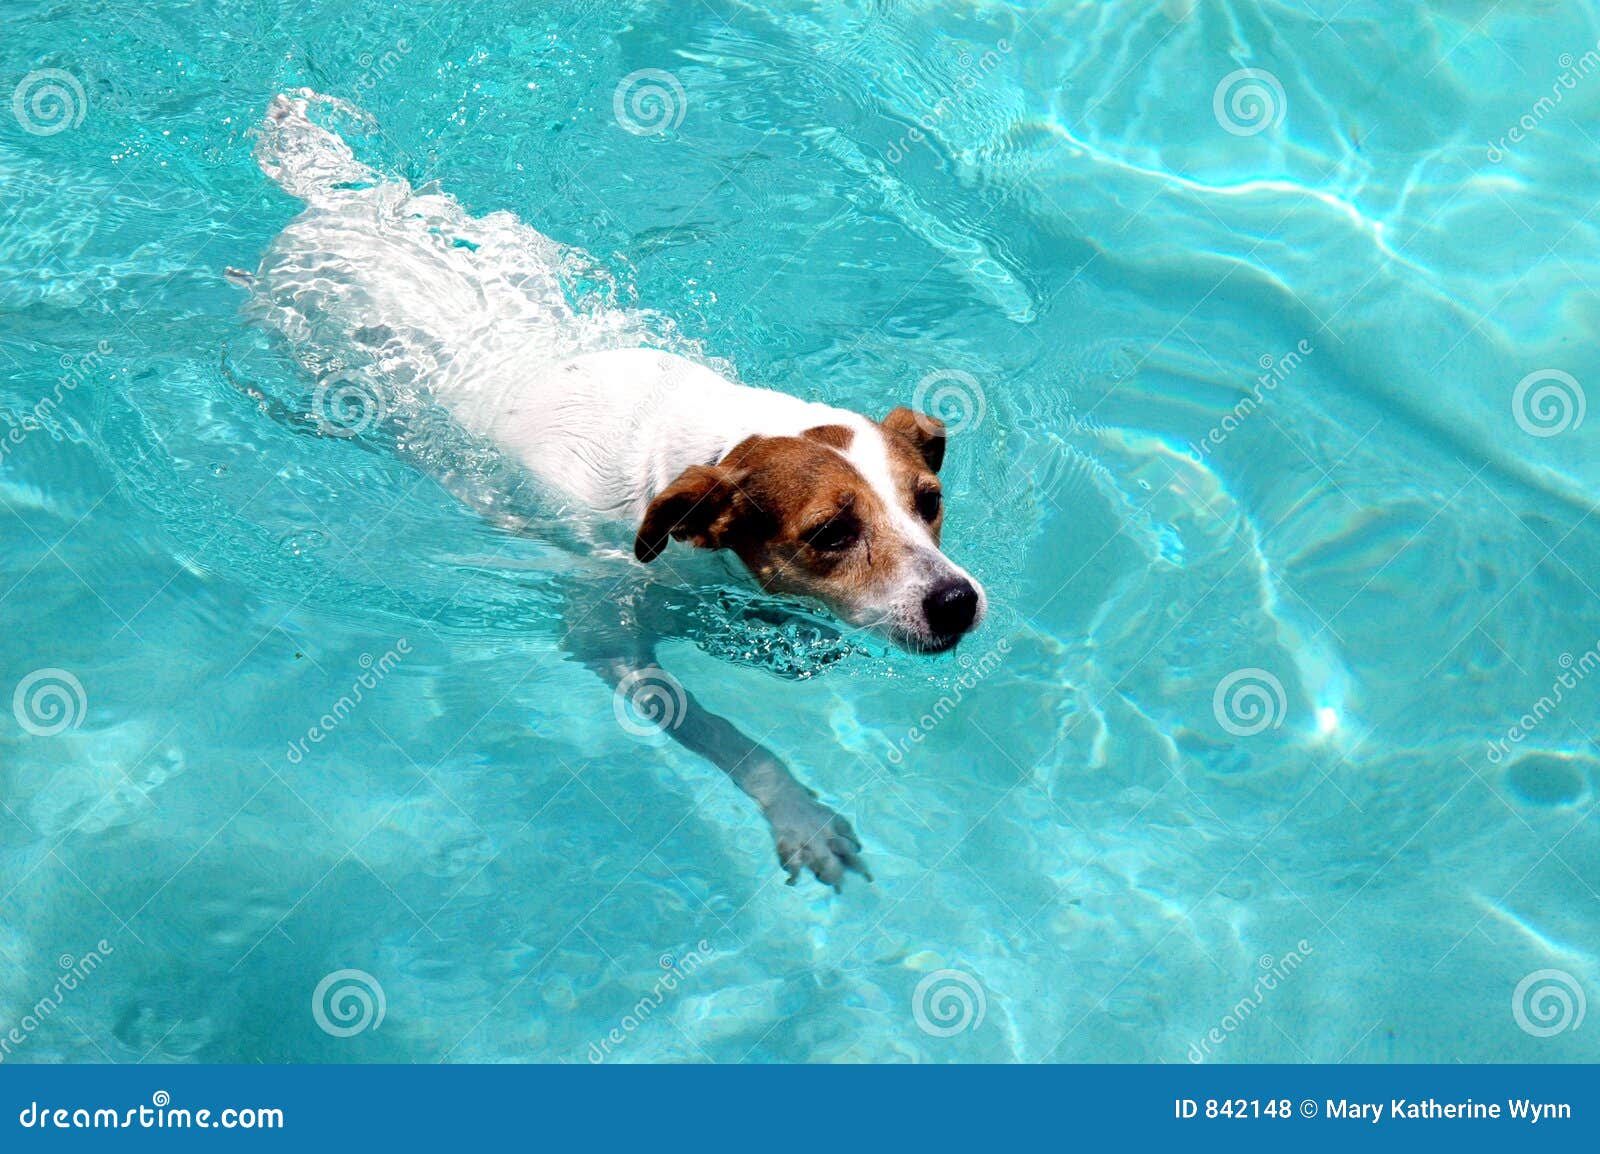 clipart dog swimming - photo #10